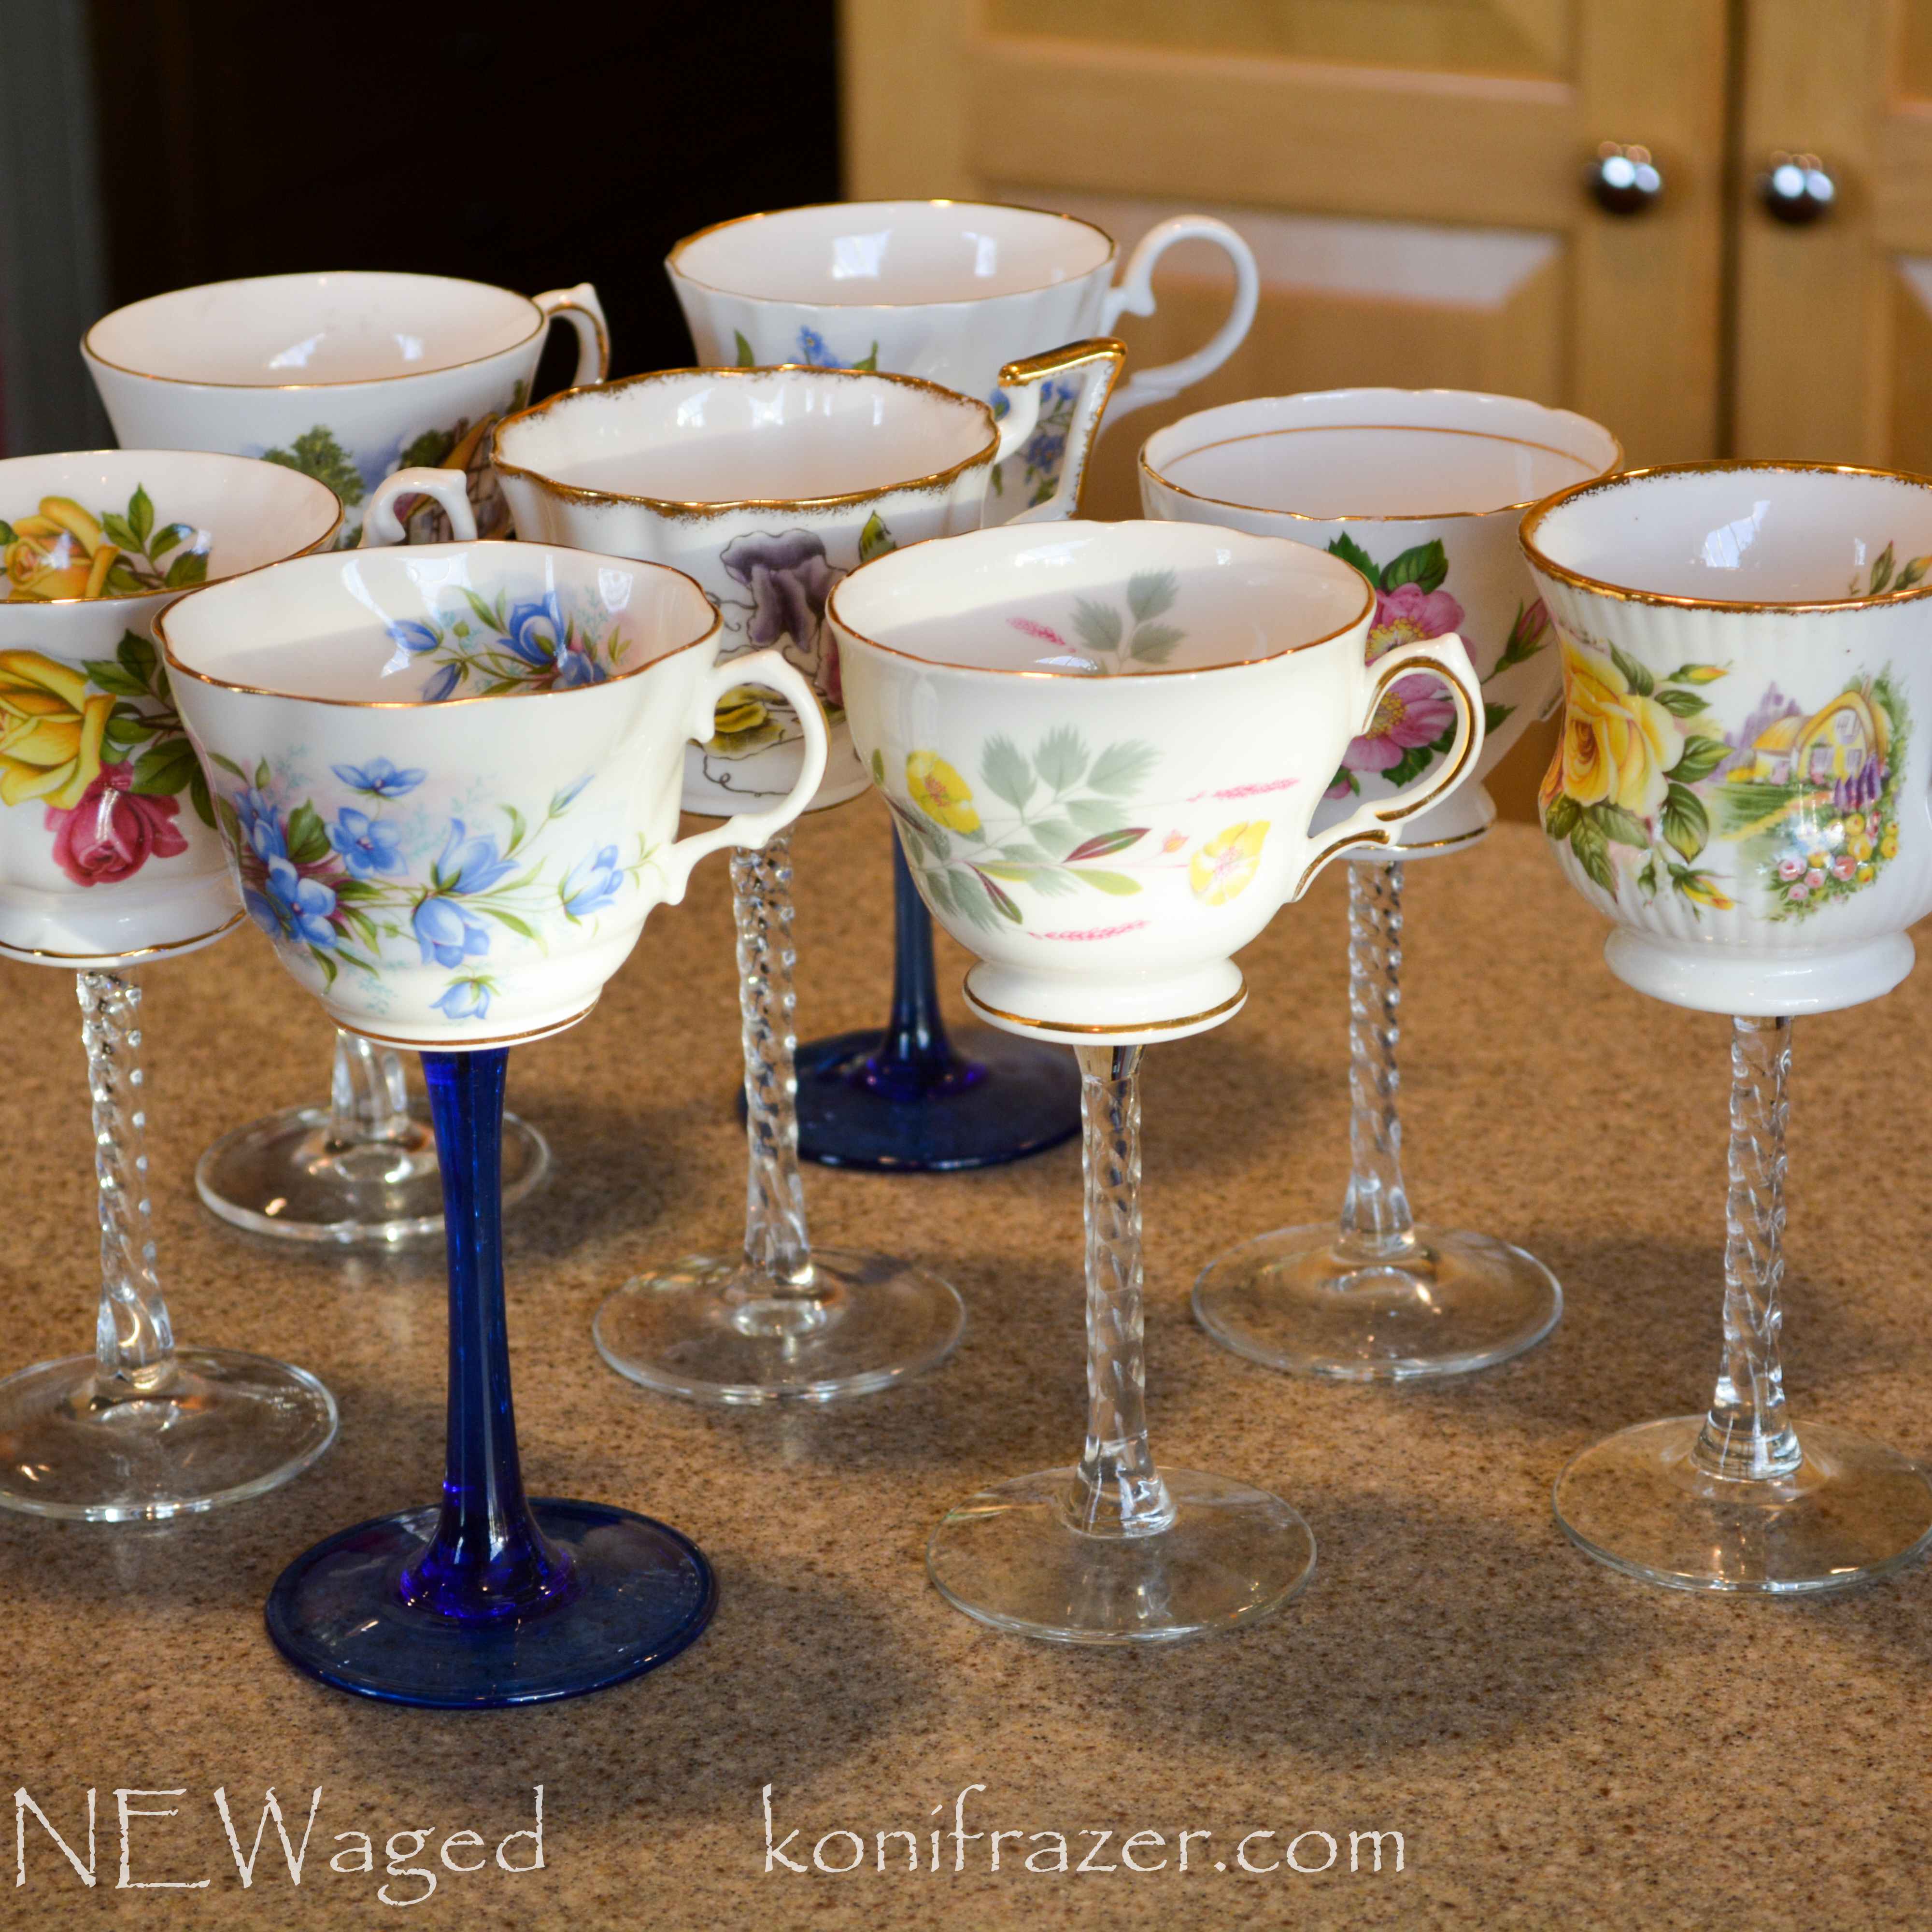 http://www.konifrazer.com/wp-content/uploads/2014/10/How-to-Make-a-Tea-Cup-Wine-Glass.jpg